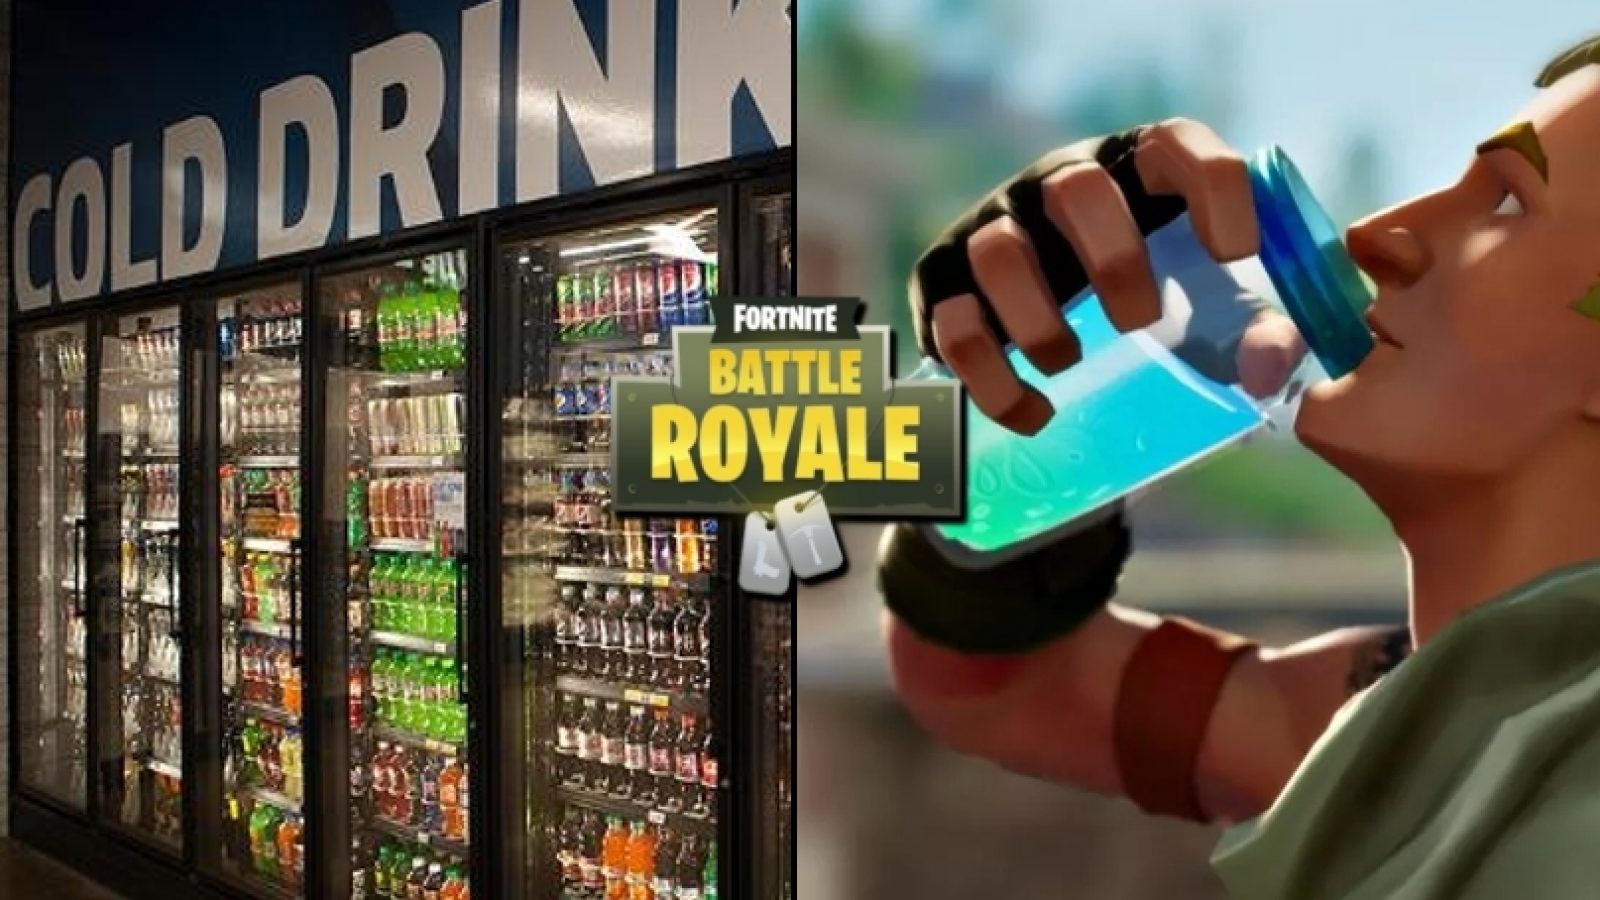 Fortnite – The Video Game Soda Machine Project